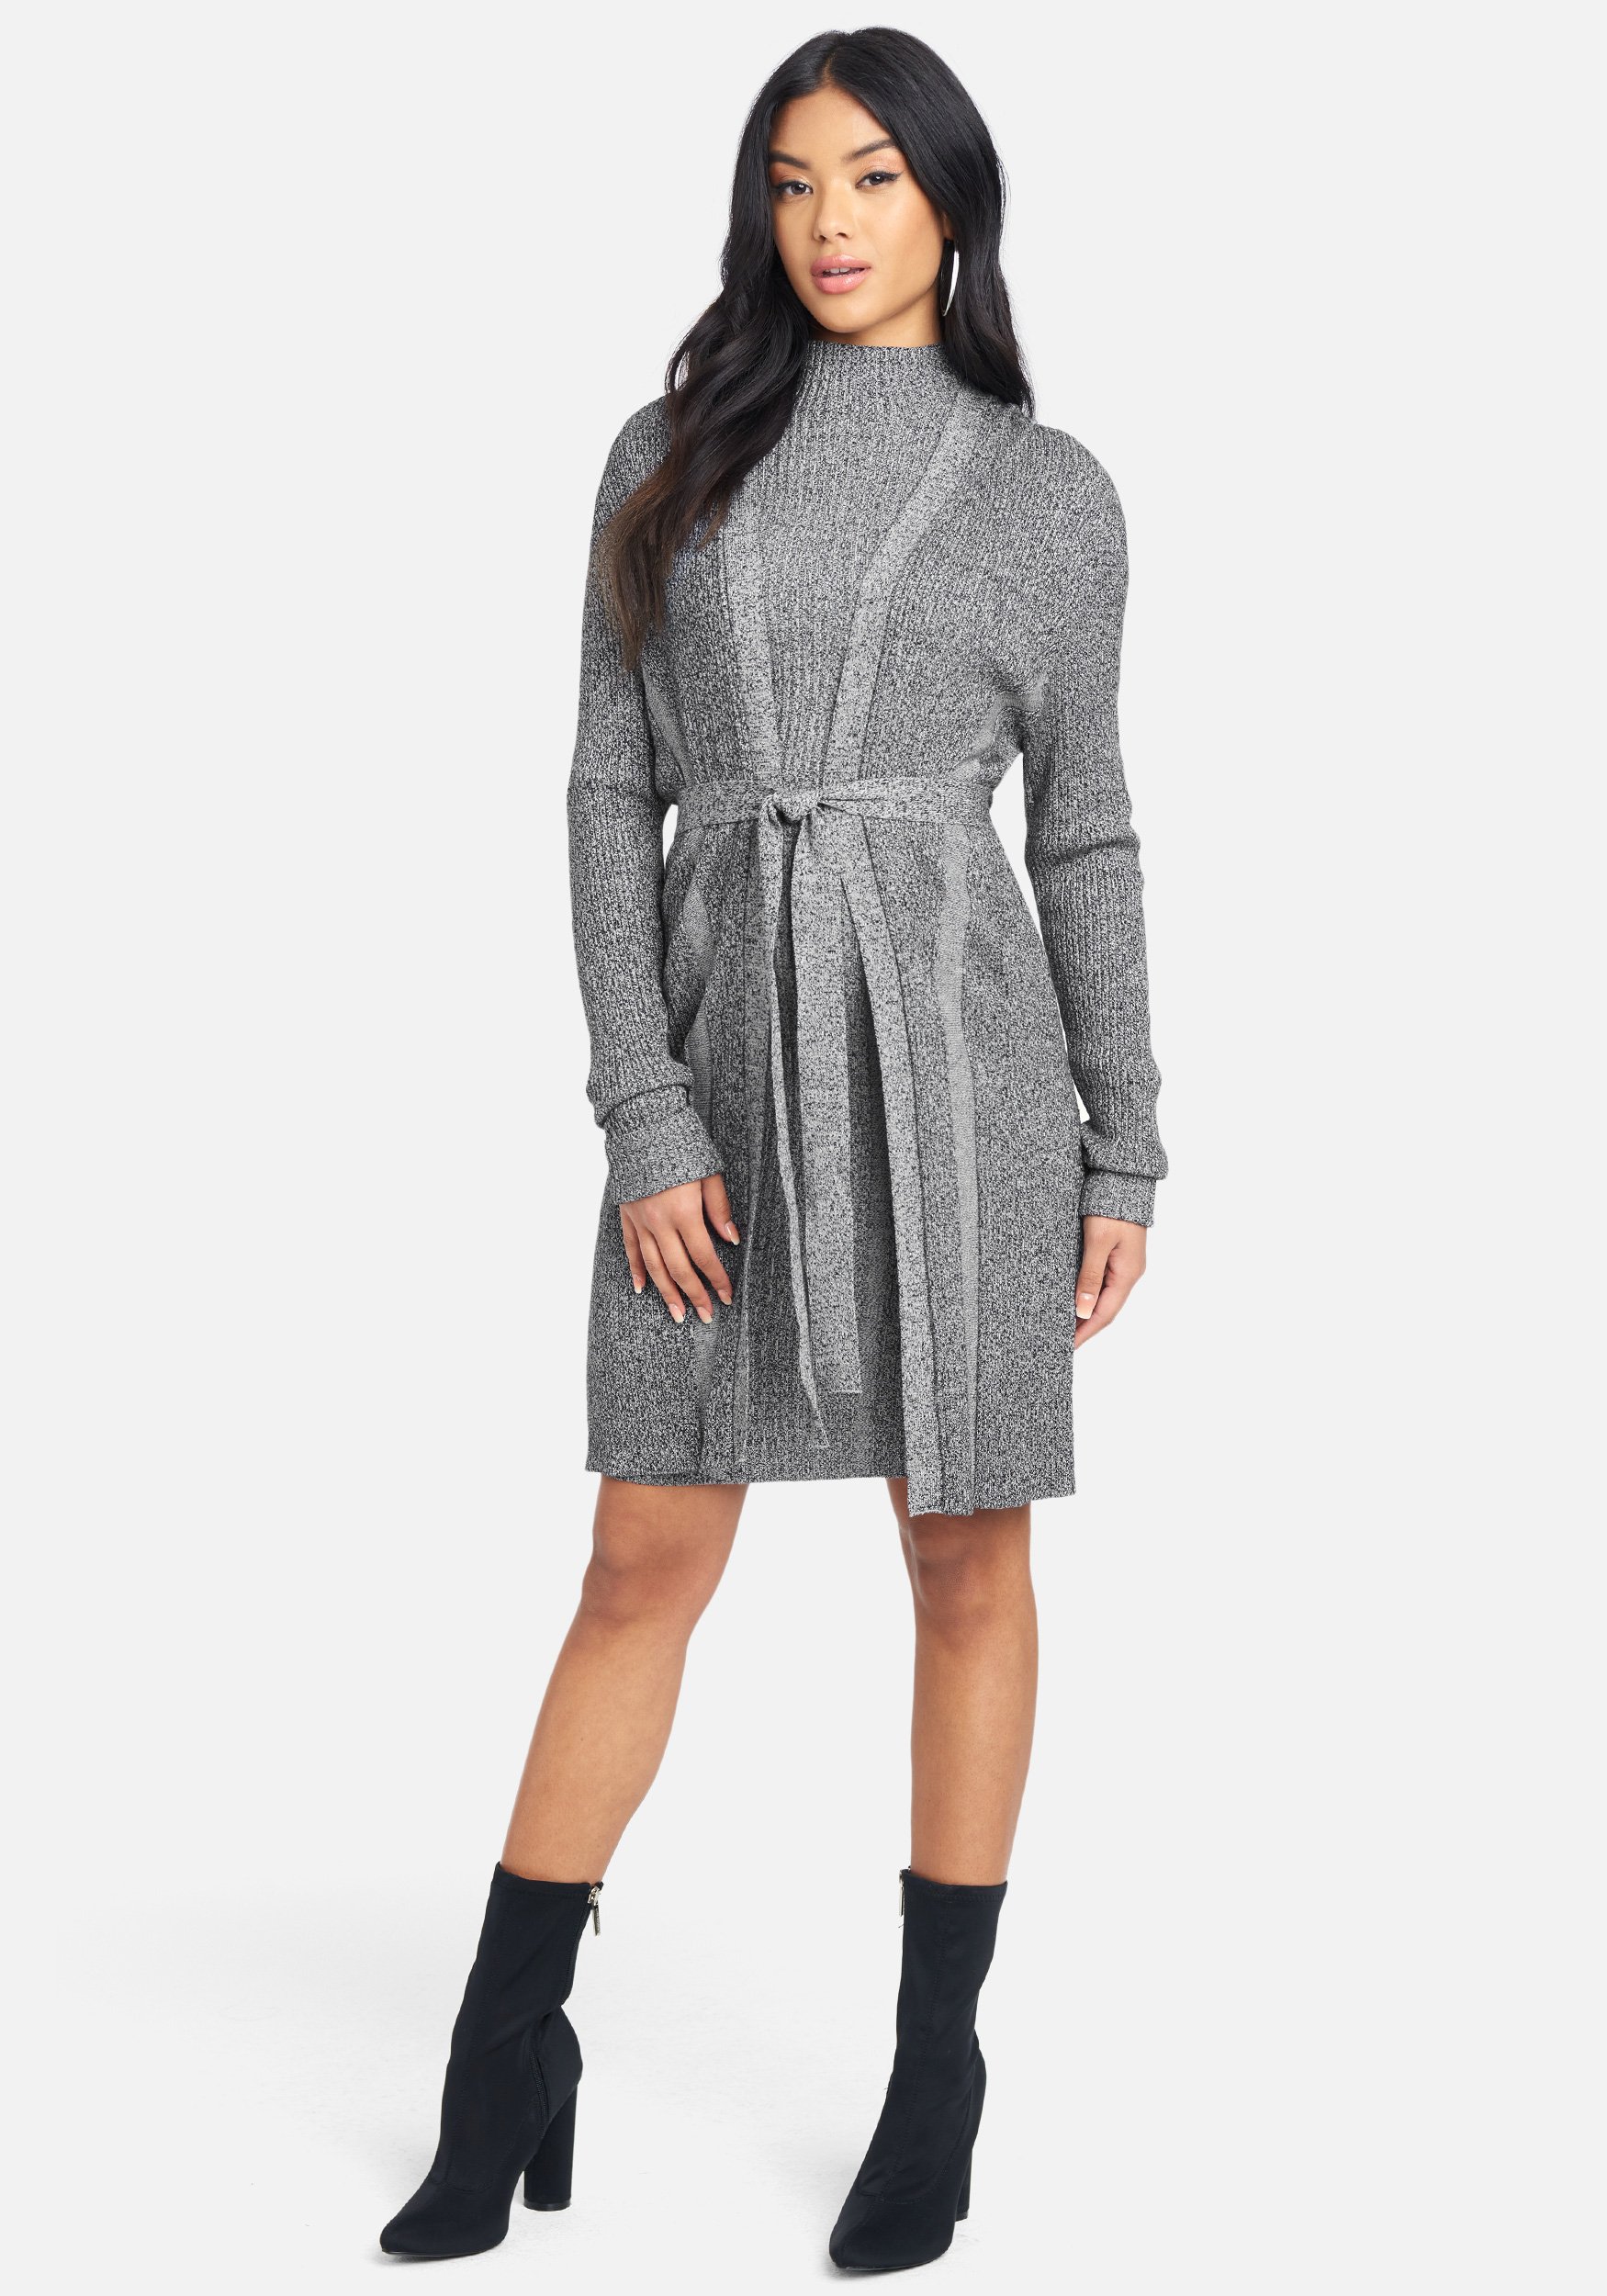 Bebe Women's MÃ©lange Knit Hooded Sweater Cardigan, Size Small in Silver Grey Viscose/Nylon